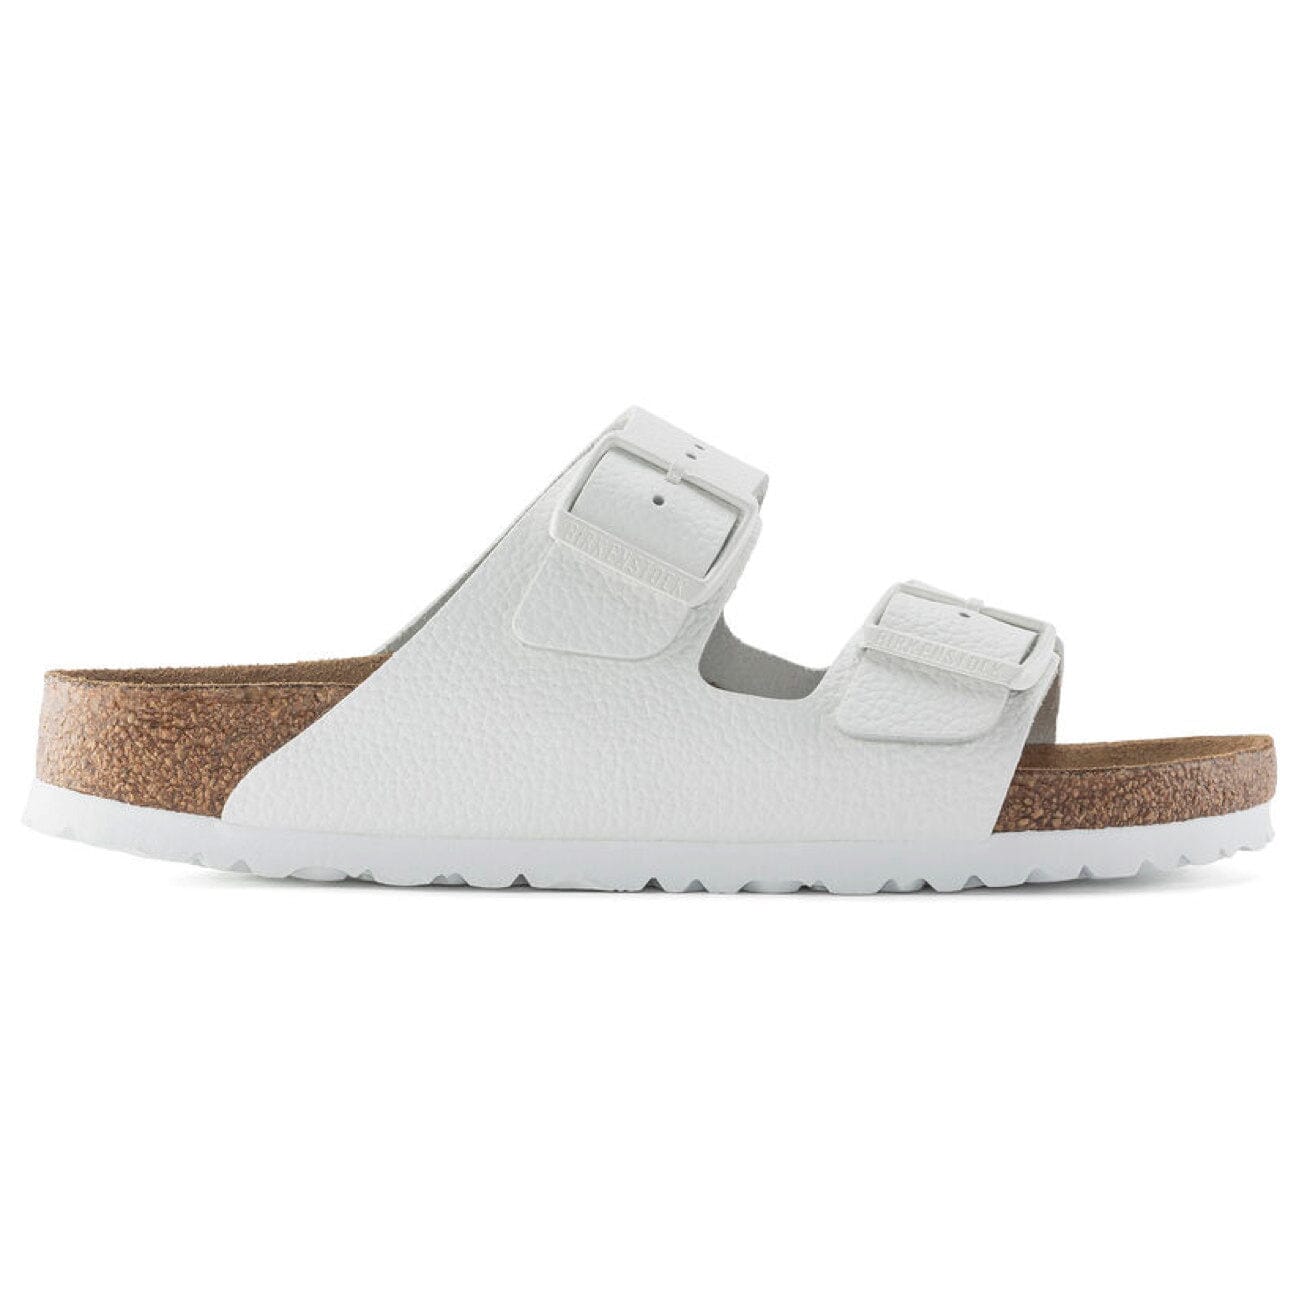 Birkenstock Arizona SFB, White Smooth Leather, Regular Fit Sandals Birkenstock Premium White 35 